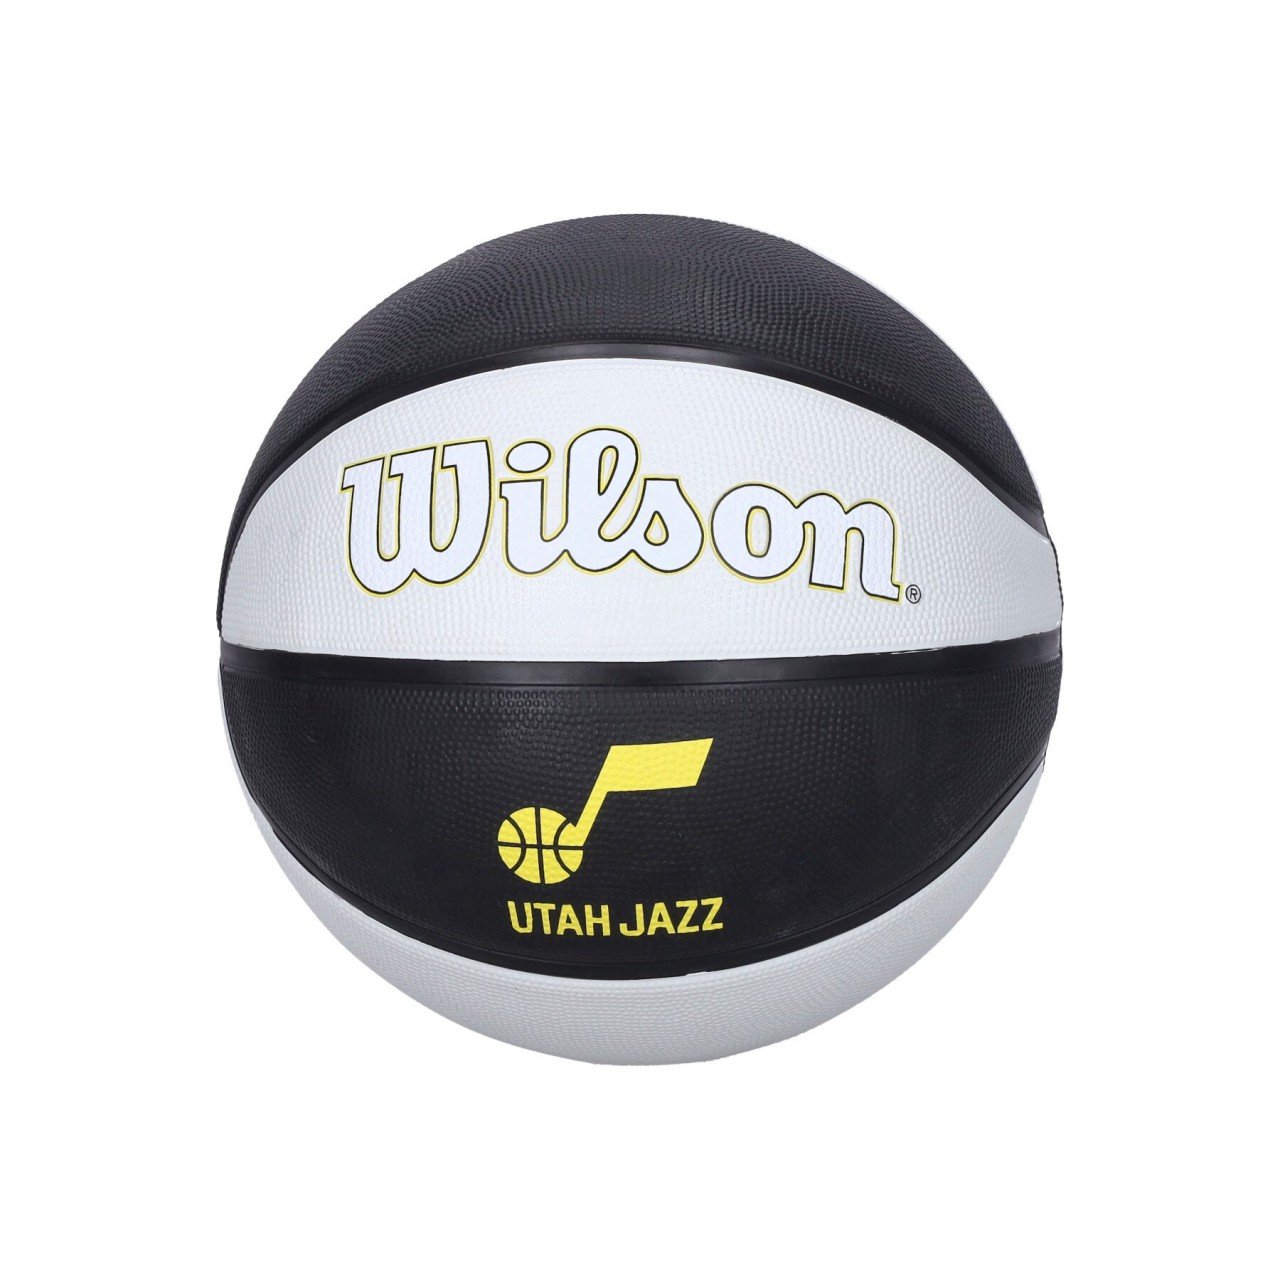 WILSON TEAM NBA TEAM TRIBUTE BASKETBALL SIZE 7 UTAJAZ WZ4011602XB7